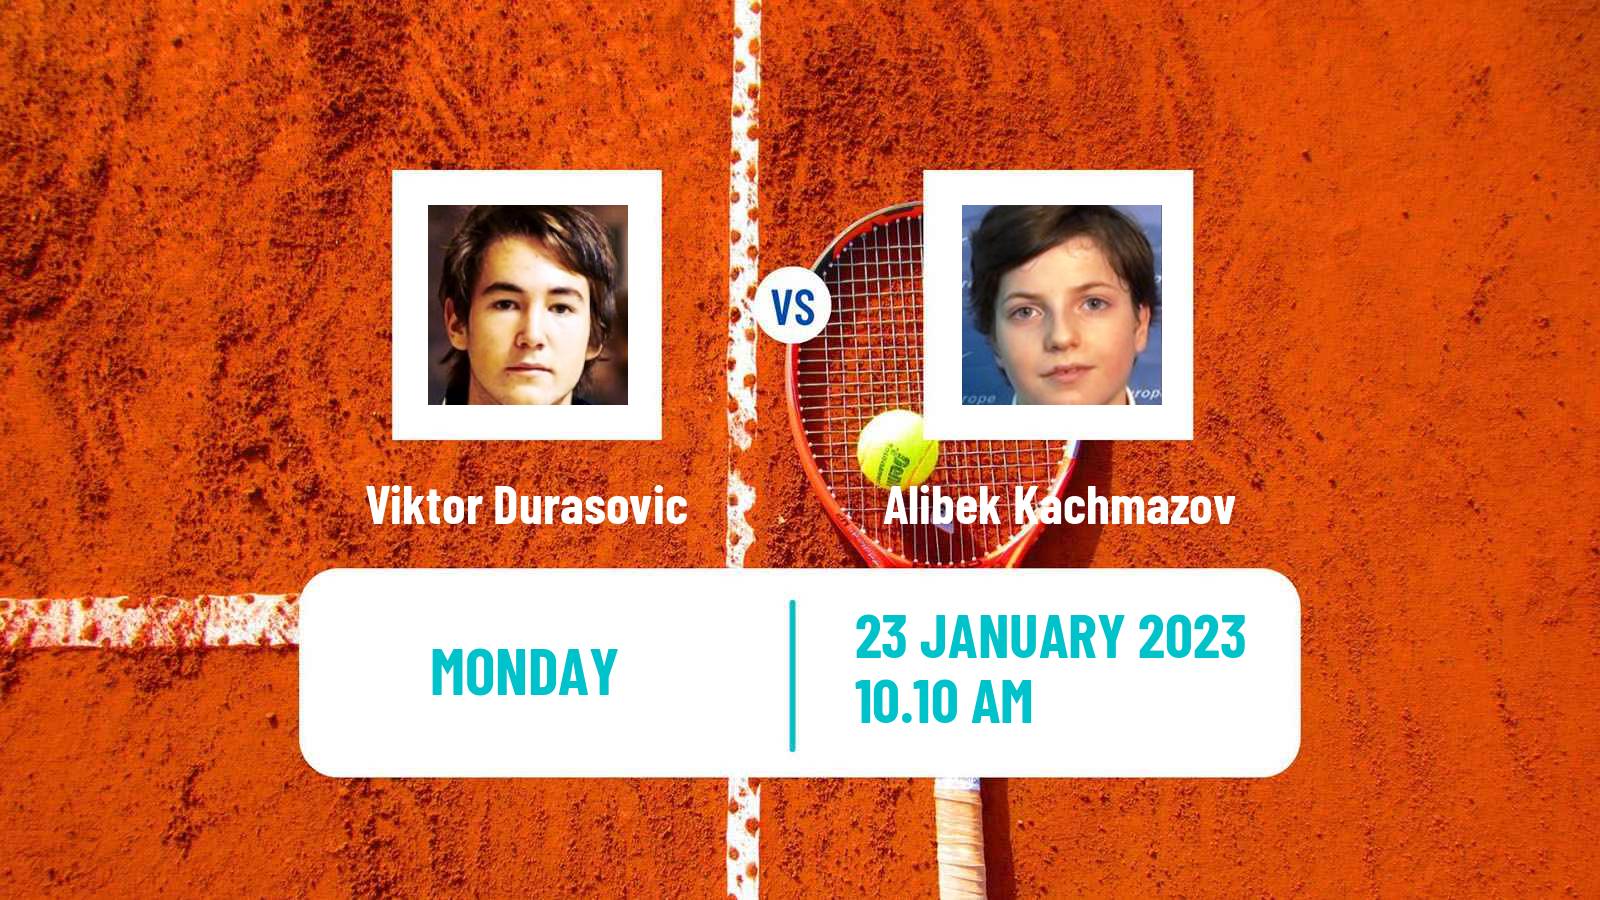 Tennis ATP Challenger Viktor Durasovic - Alibek Kachmazov